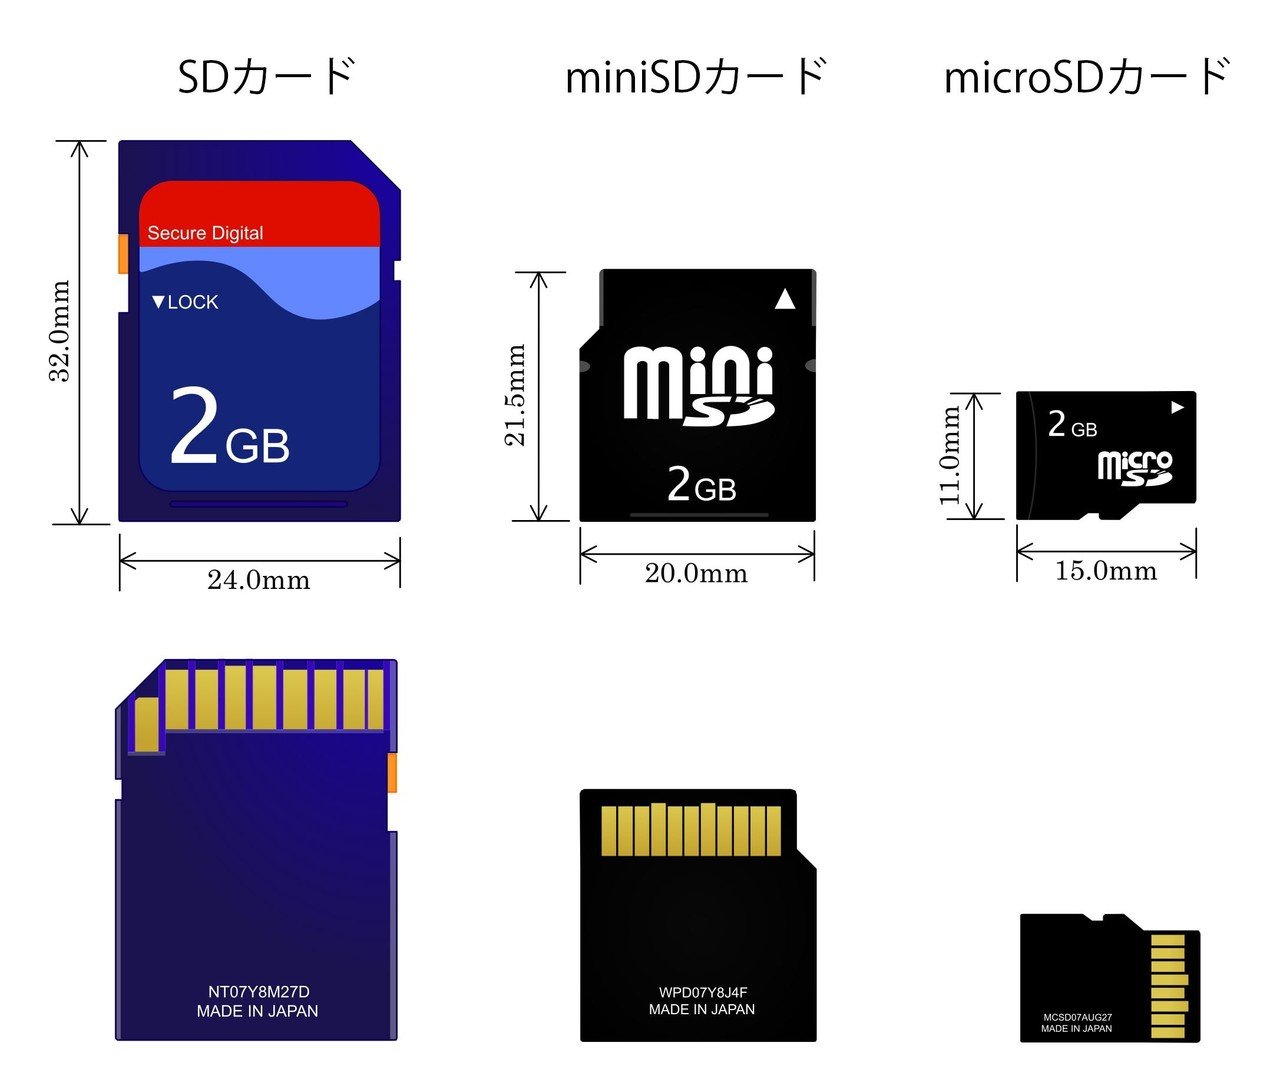 Androidスマホ向けにSDカードの選び方、容量を考えてみた（microSDXC 